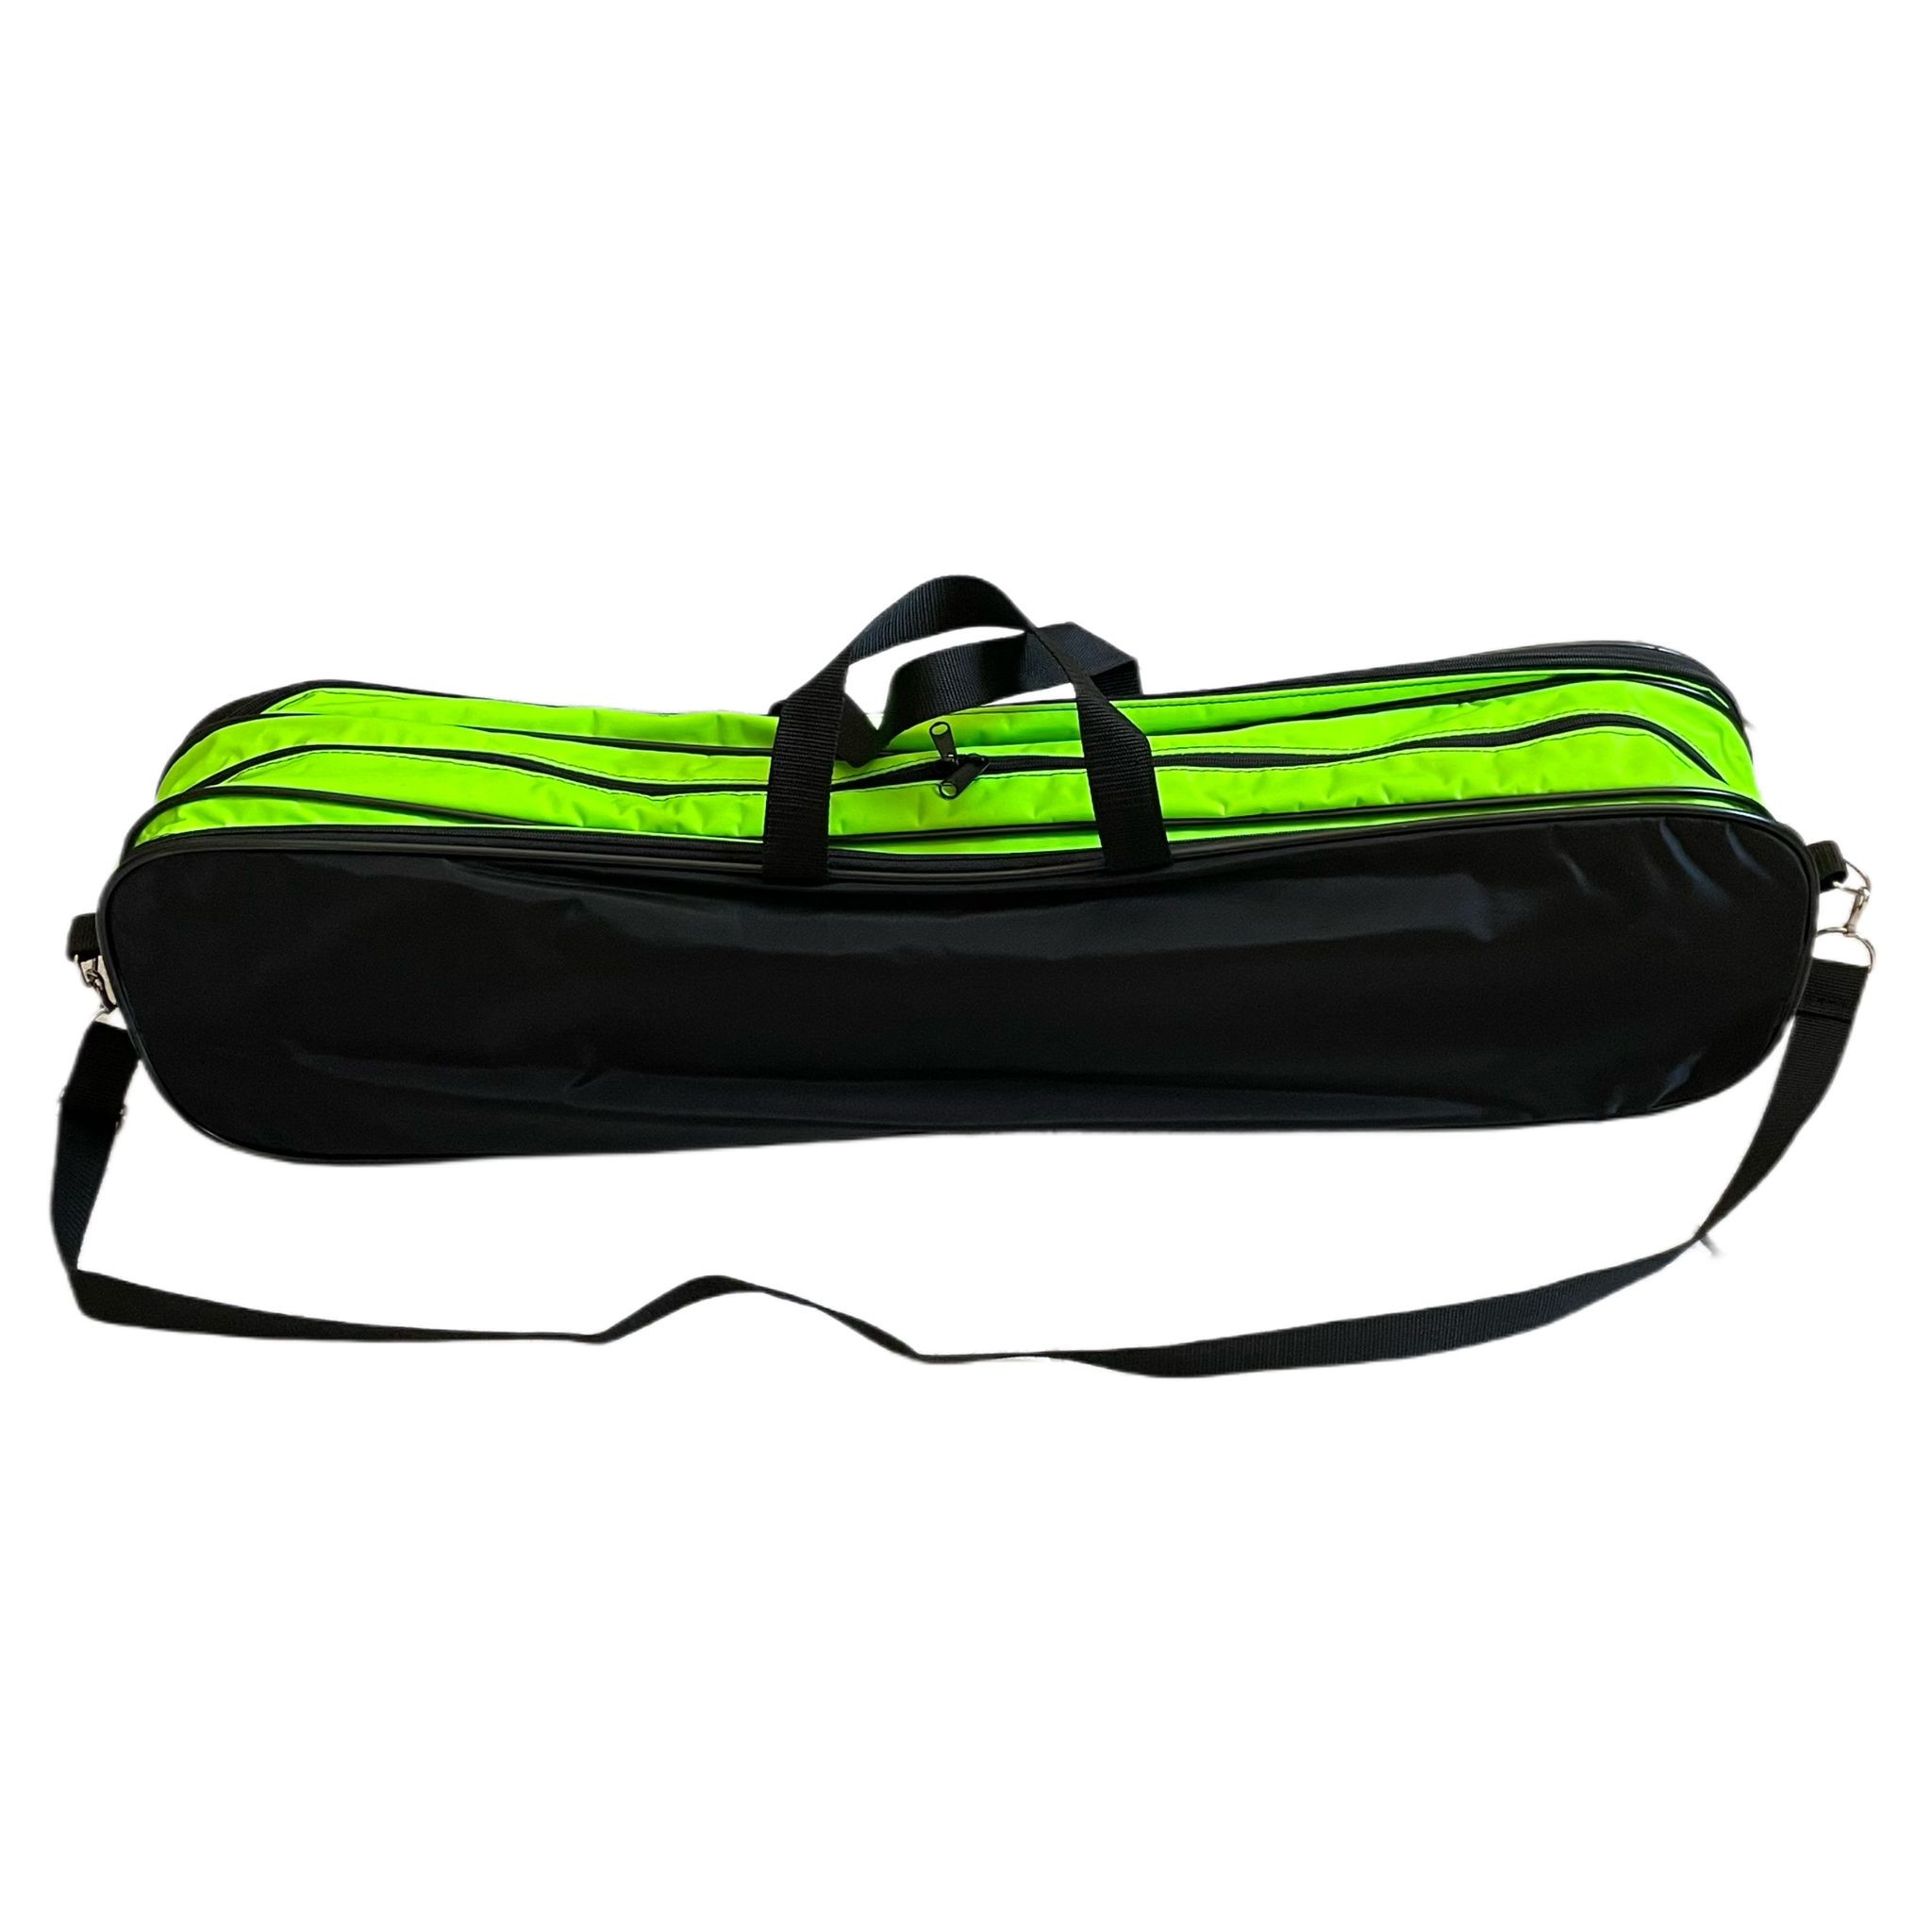 Baton Bag Large - Neon Green